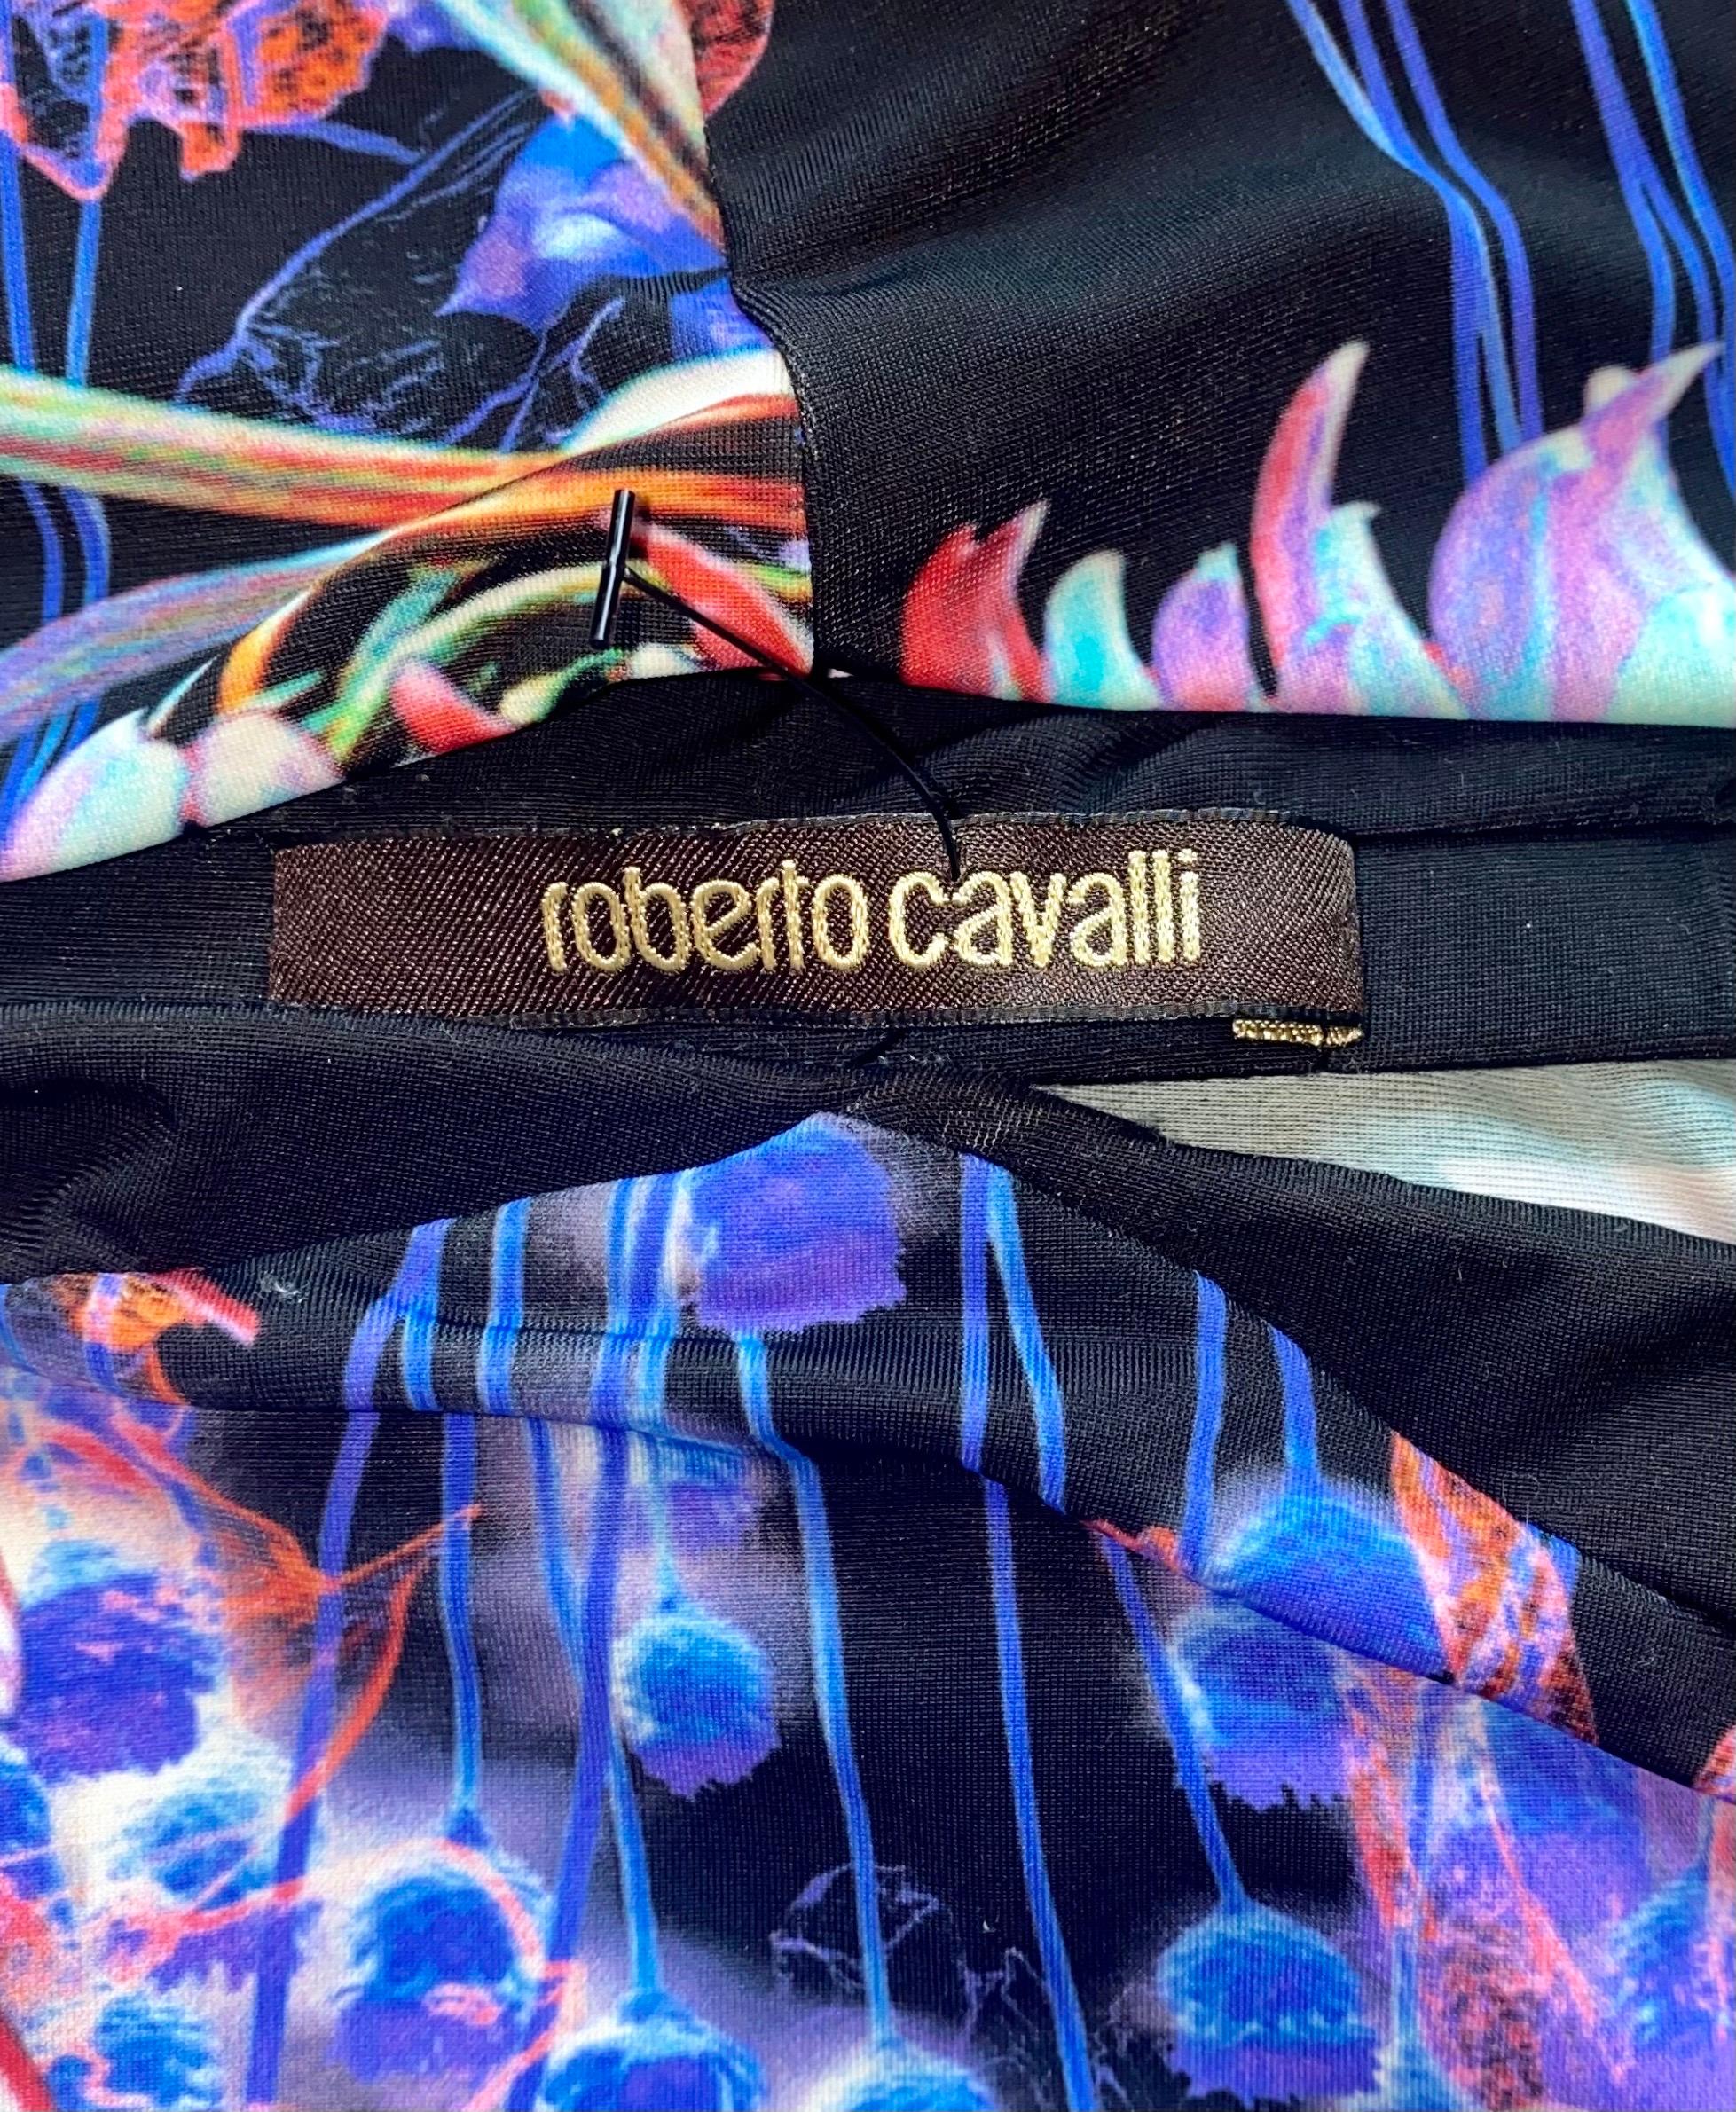 Roberto Cavalli Floral Pop Art Printed Evening Maxi Skirt 42 2